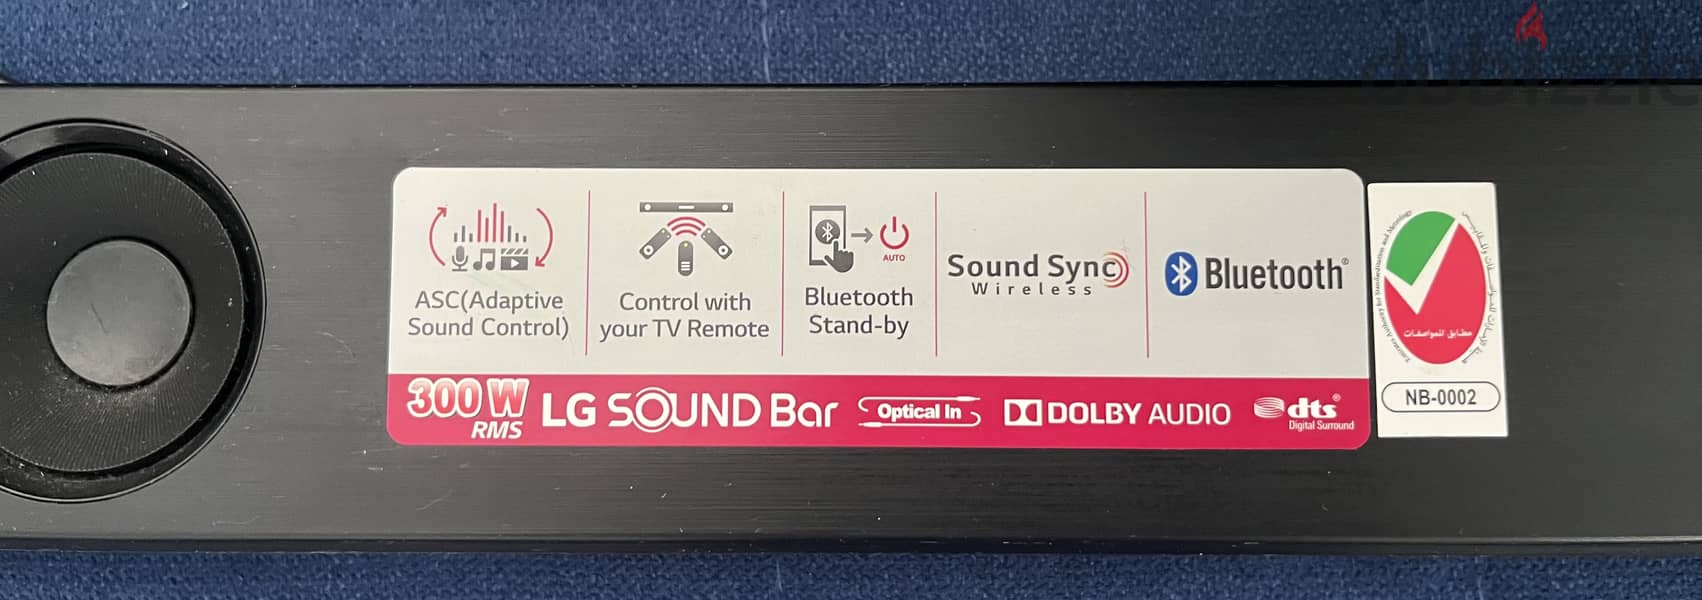 Sound system LG 1